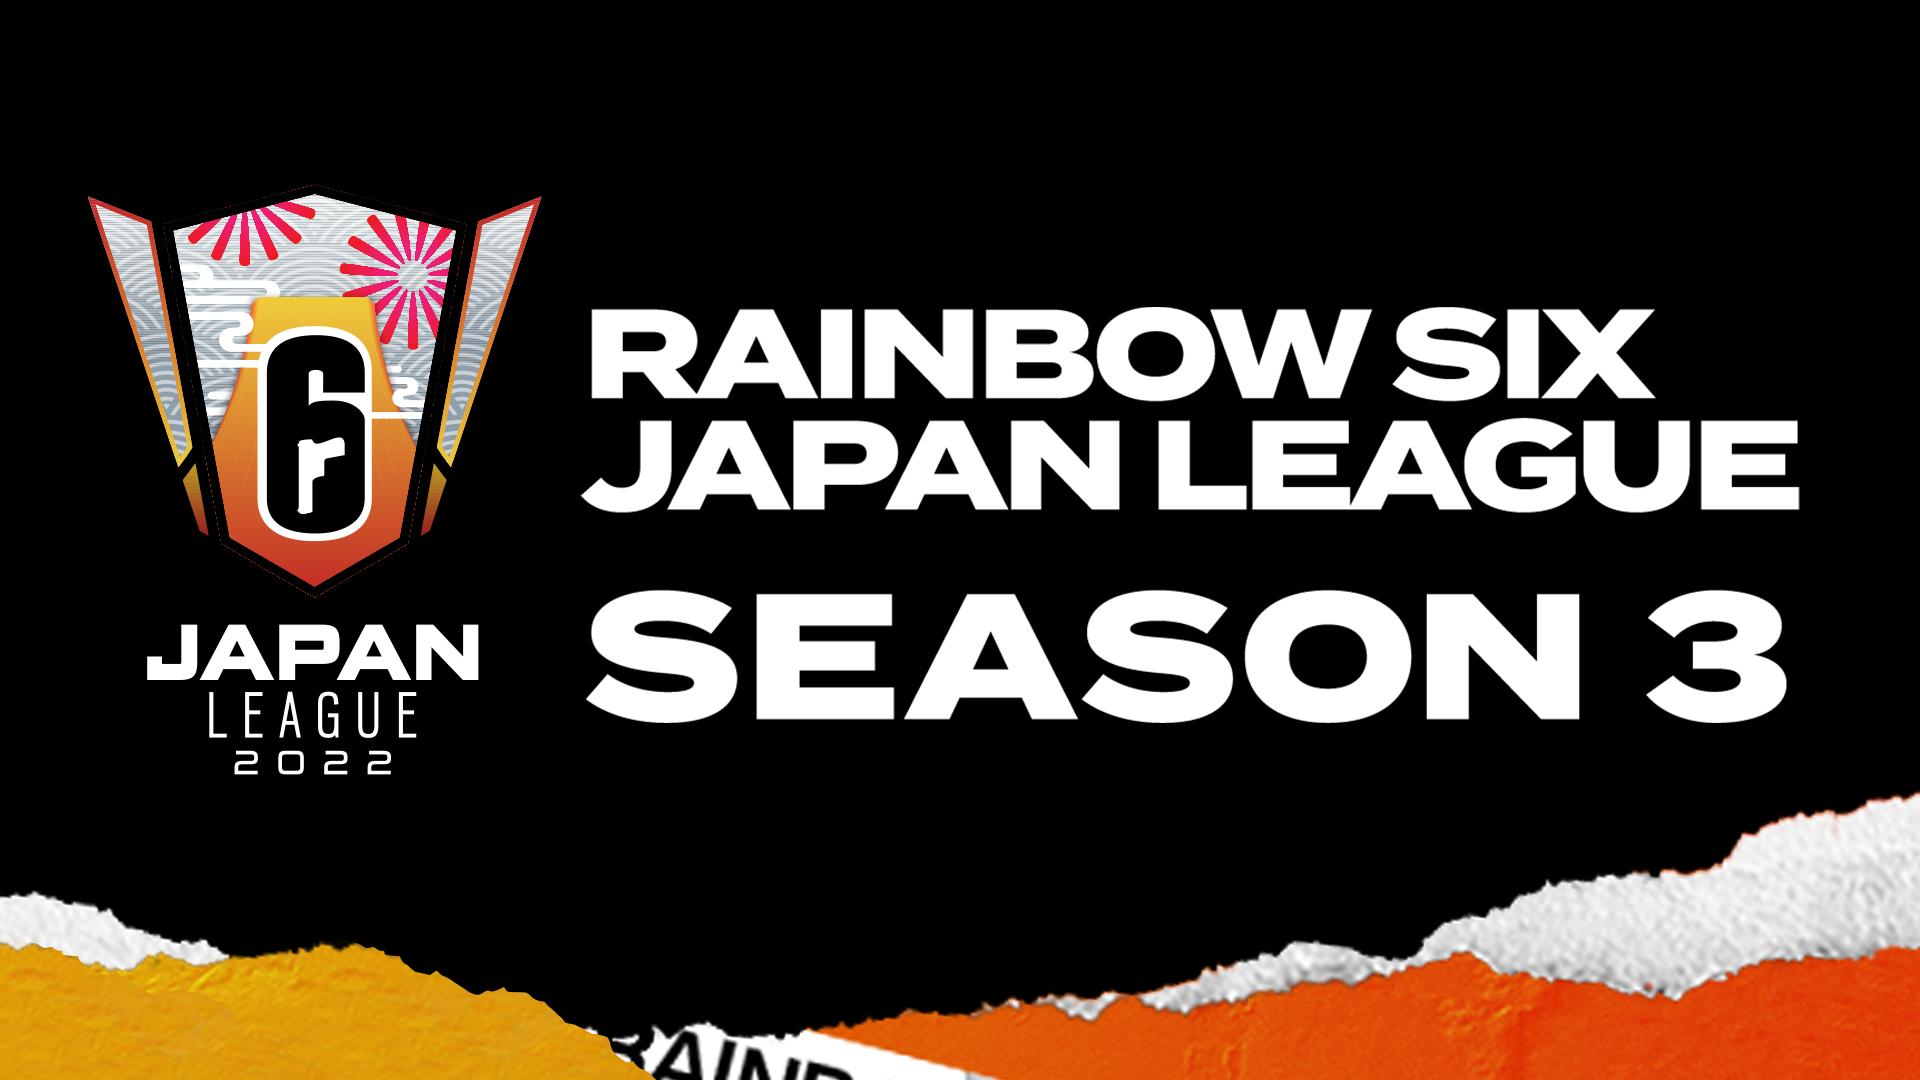 Rainbow Six Japan League 2022 Season 3 feature image